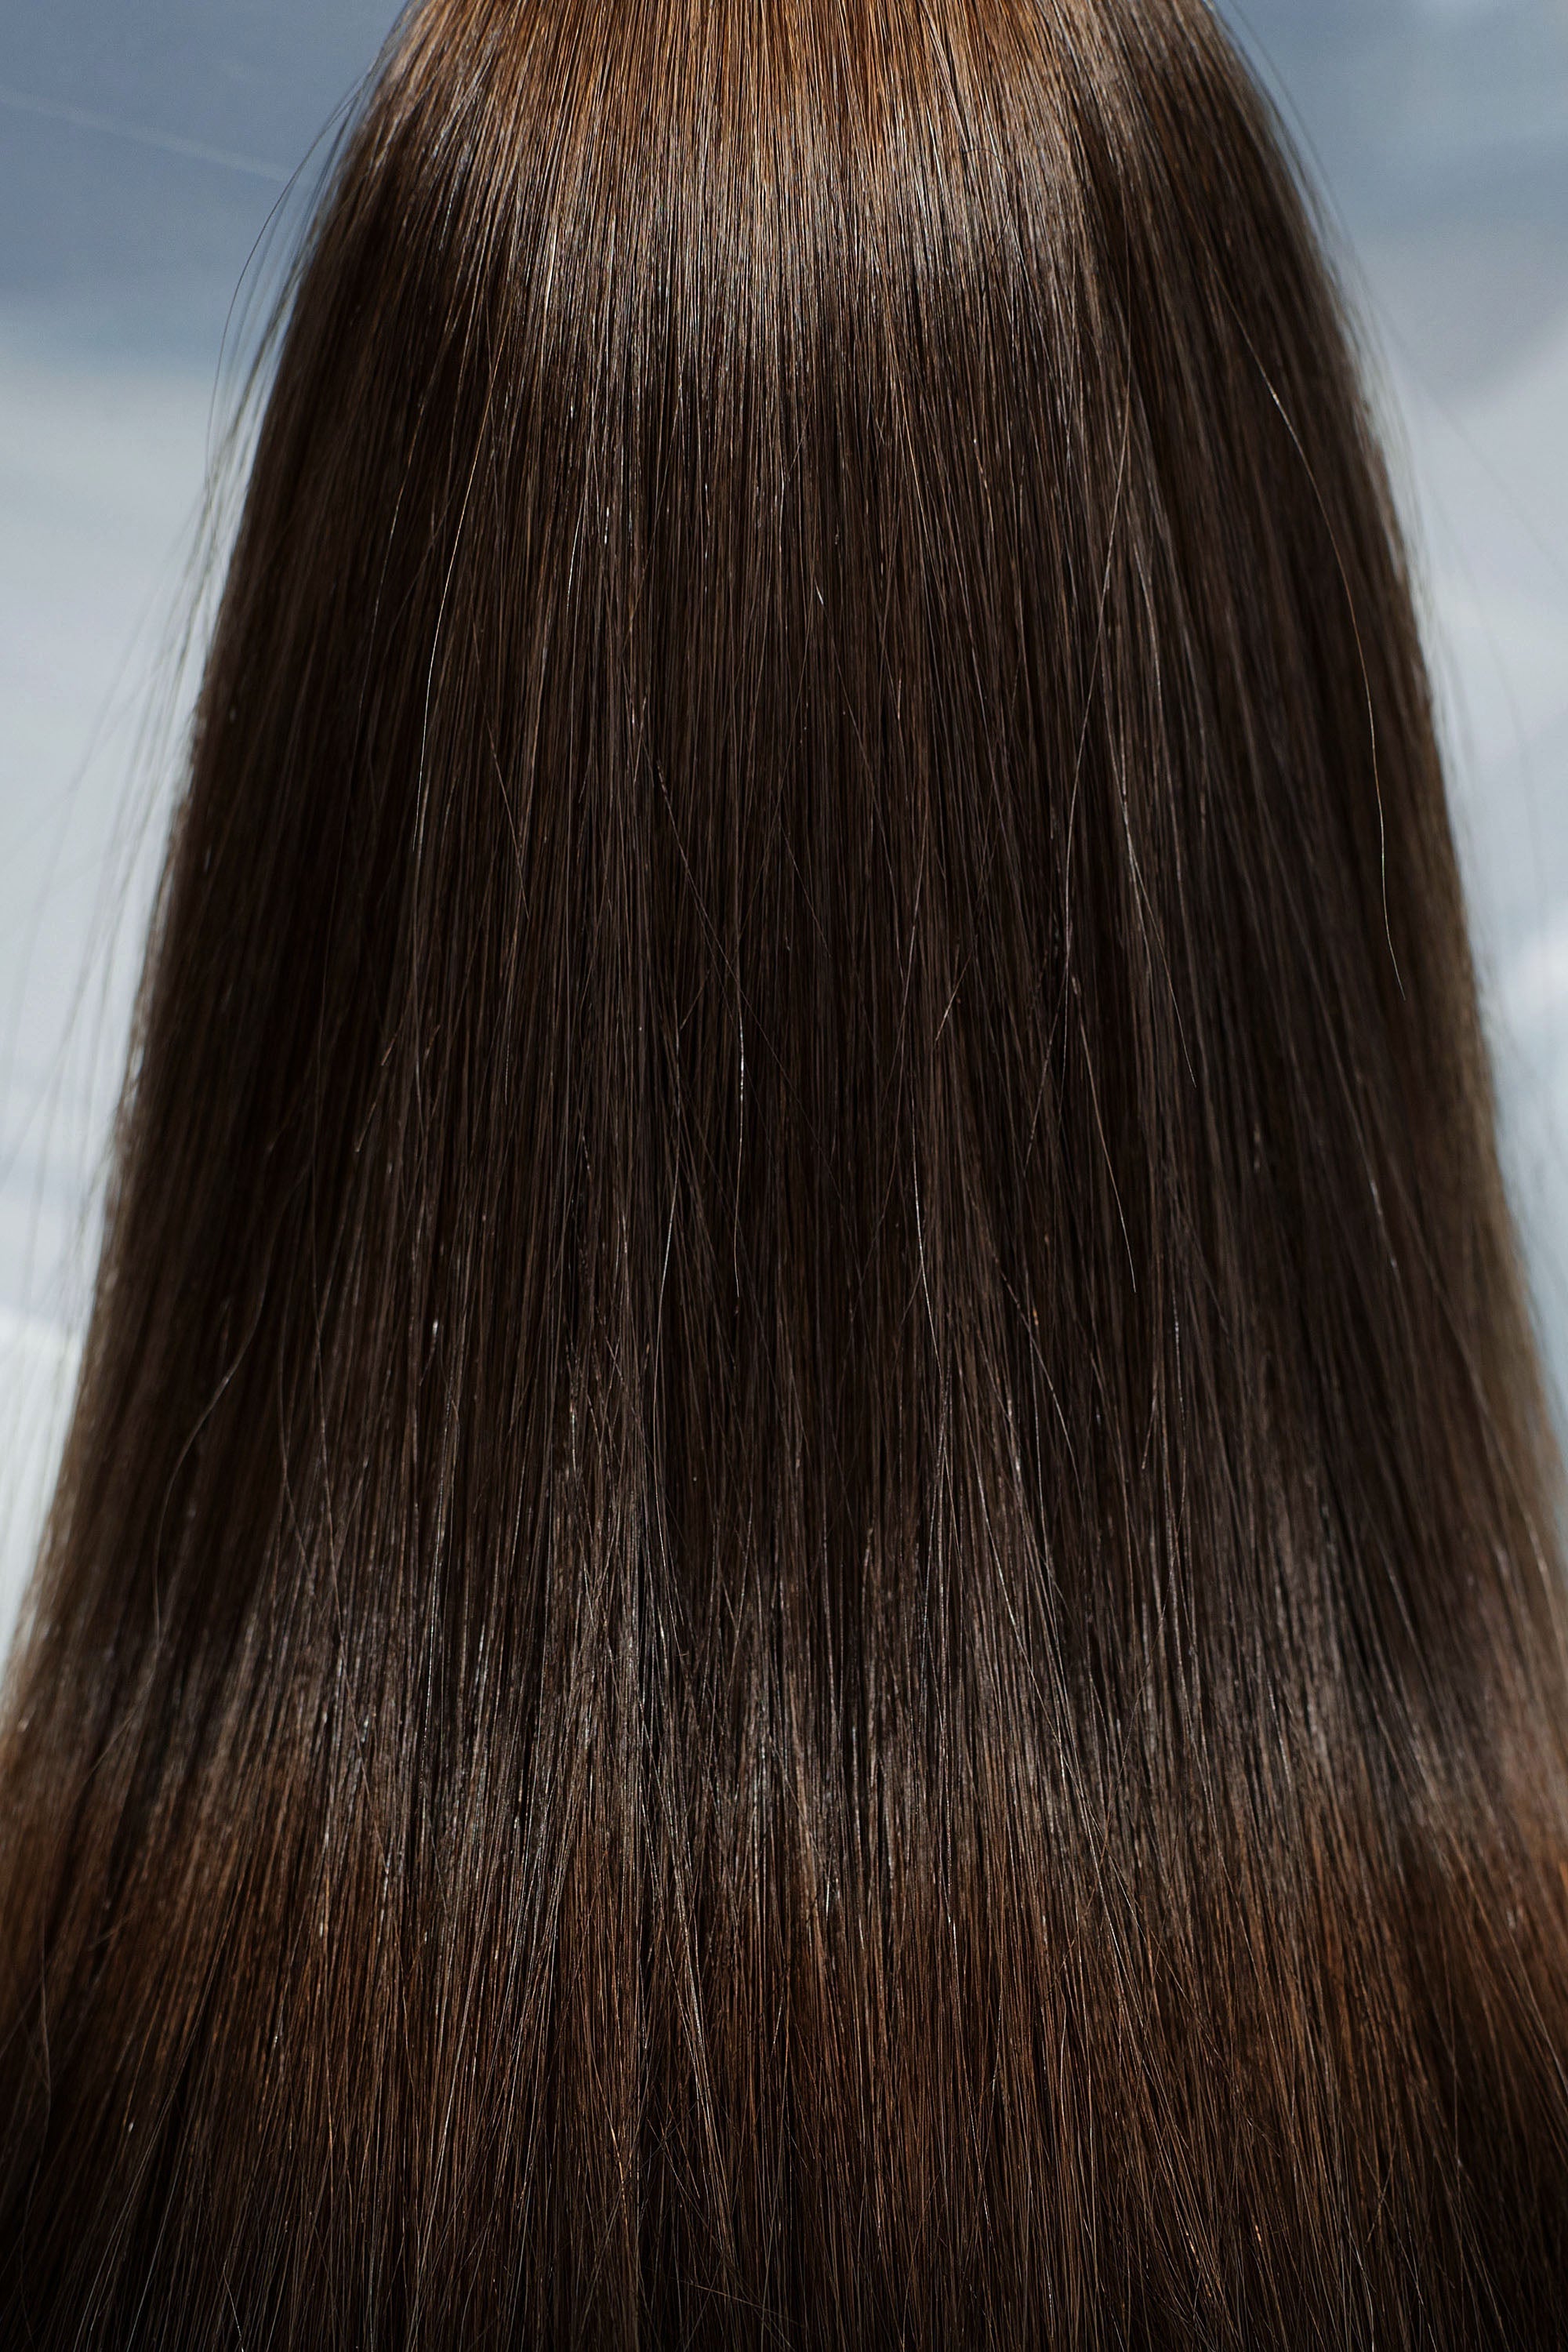 Behair professional Keratin Tip "Premium" 28" (70cm) Natural Straight Light Brown #4 - 25g (Standart - 0.7g each pcs) hair extensions